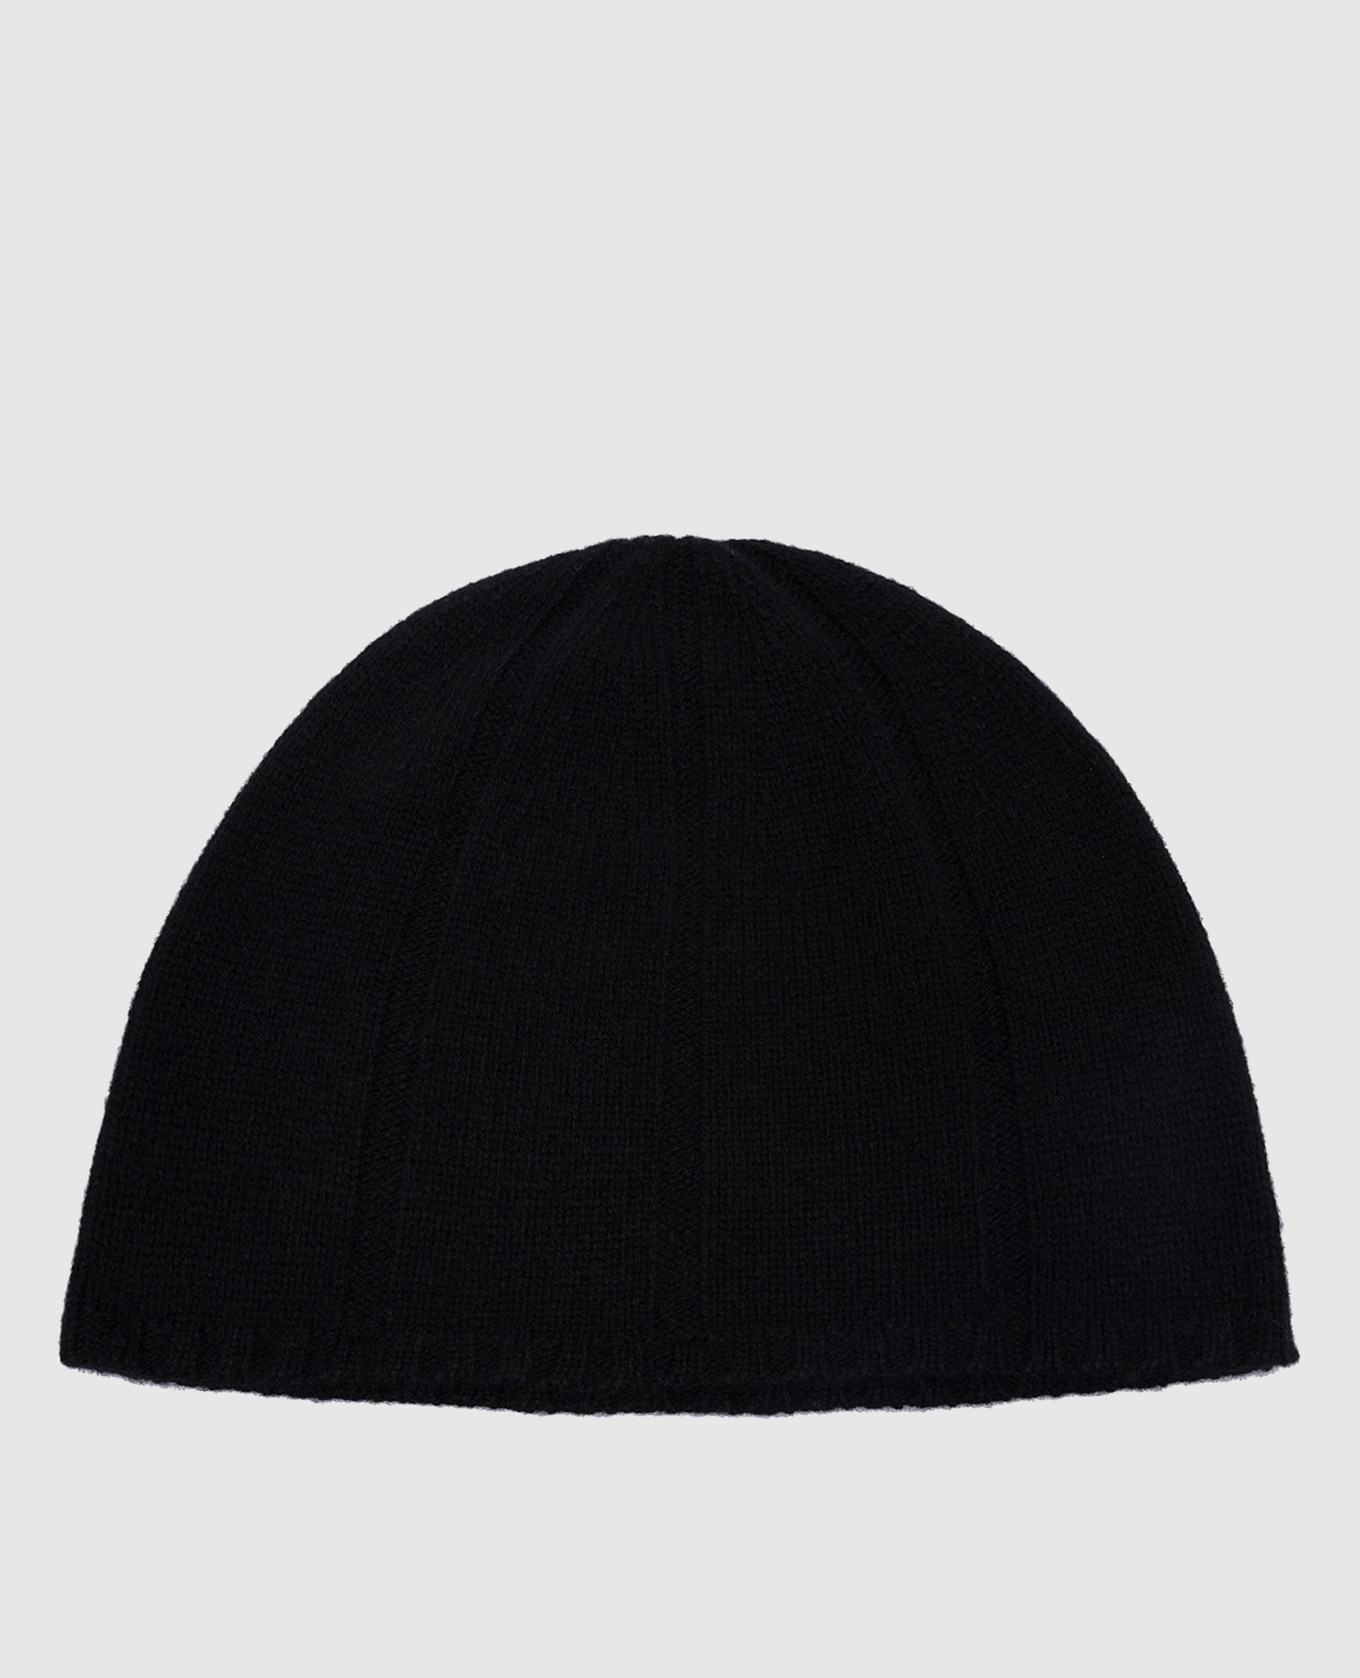 Black cap made of wool